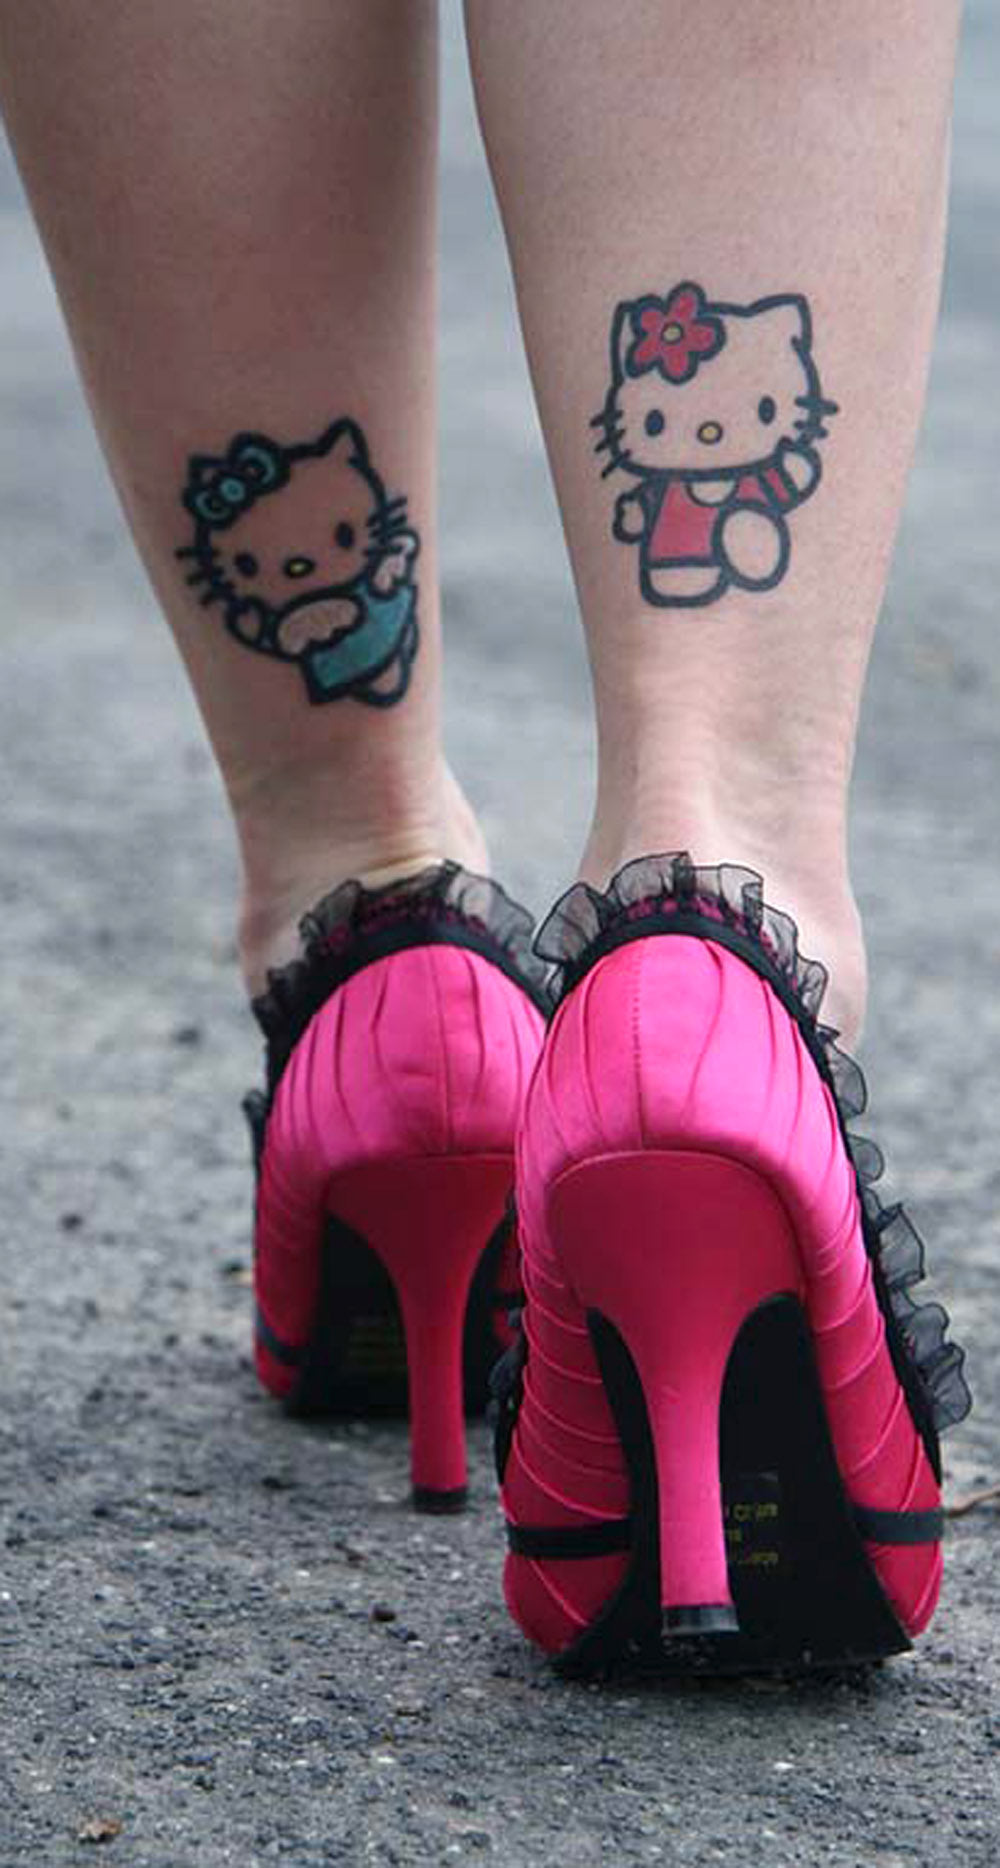 Hello Kitty Leg Calf Tattoo Ideas for Women - www.MyBodiArt.com